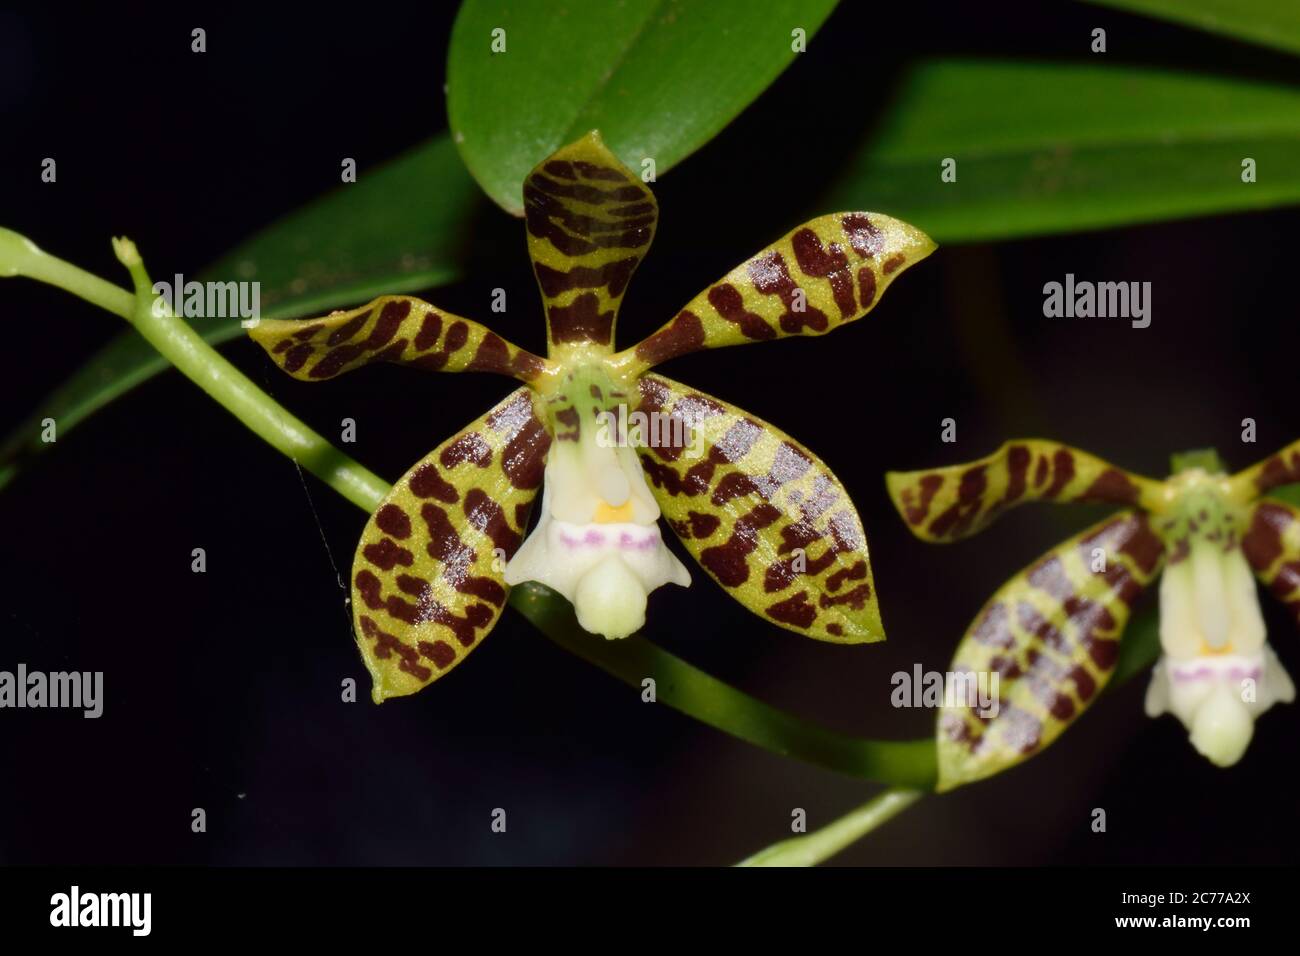 Prosthechea orchid from a Cuban garden Stock Photo